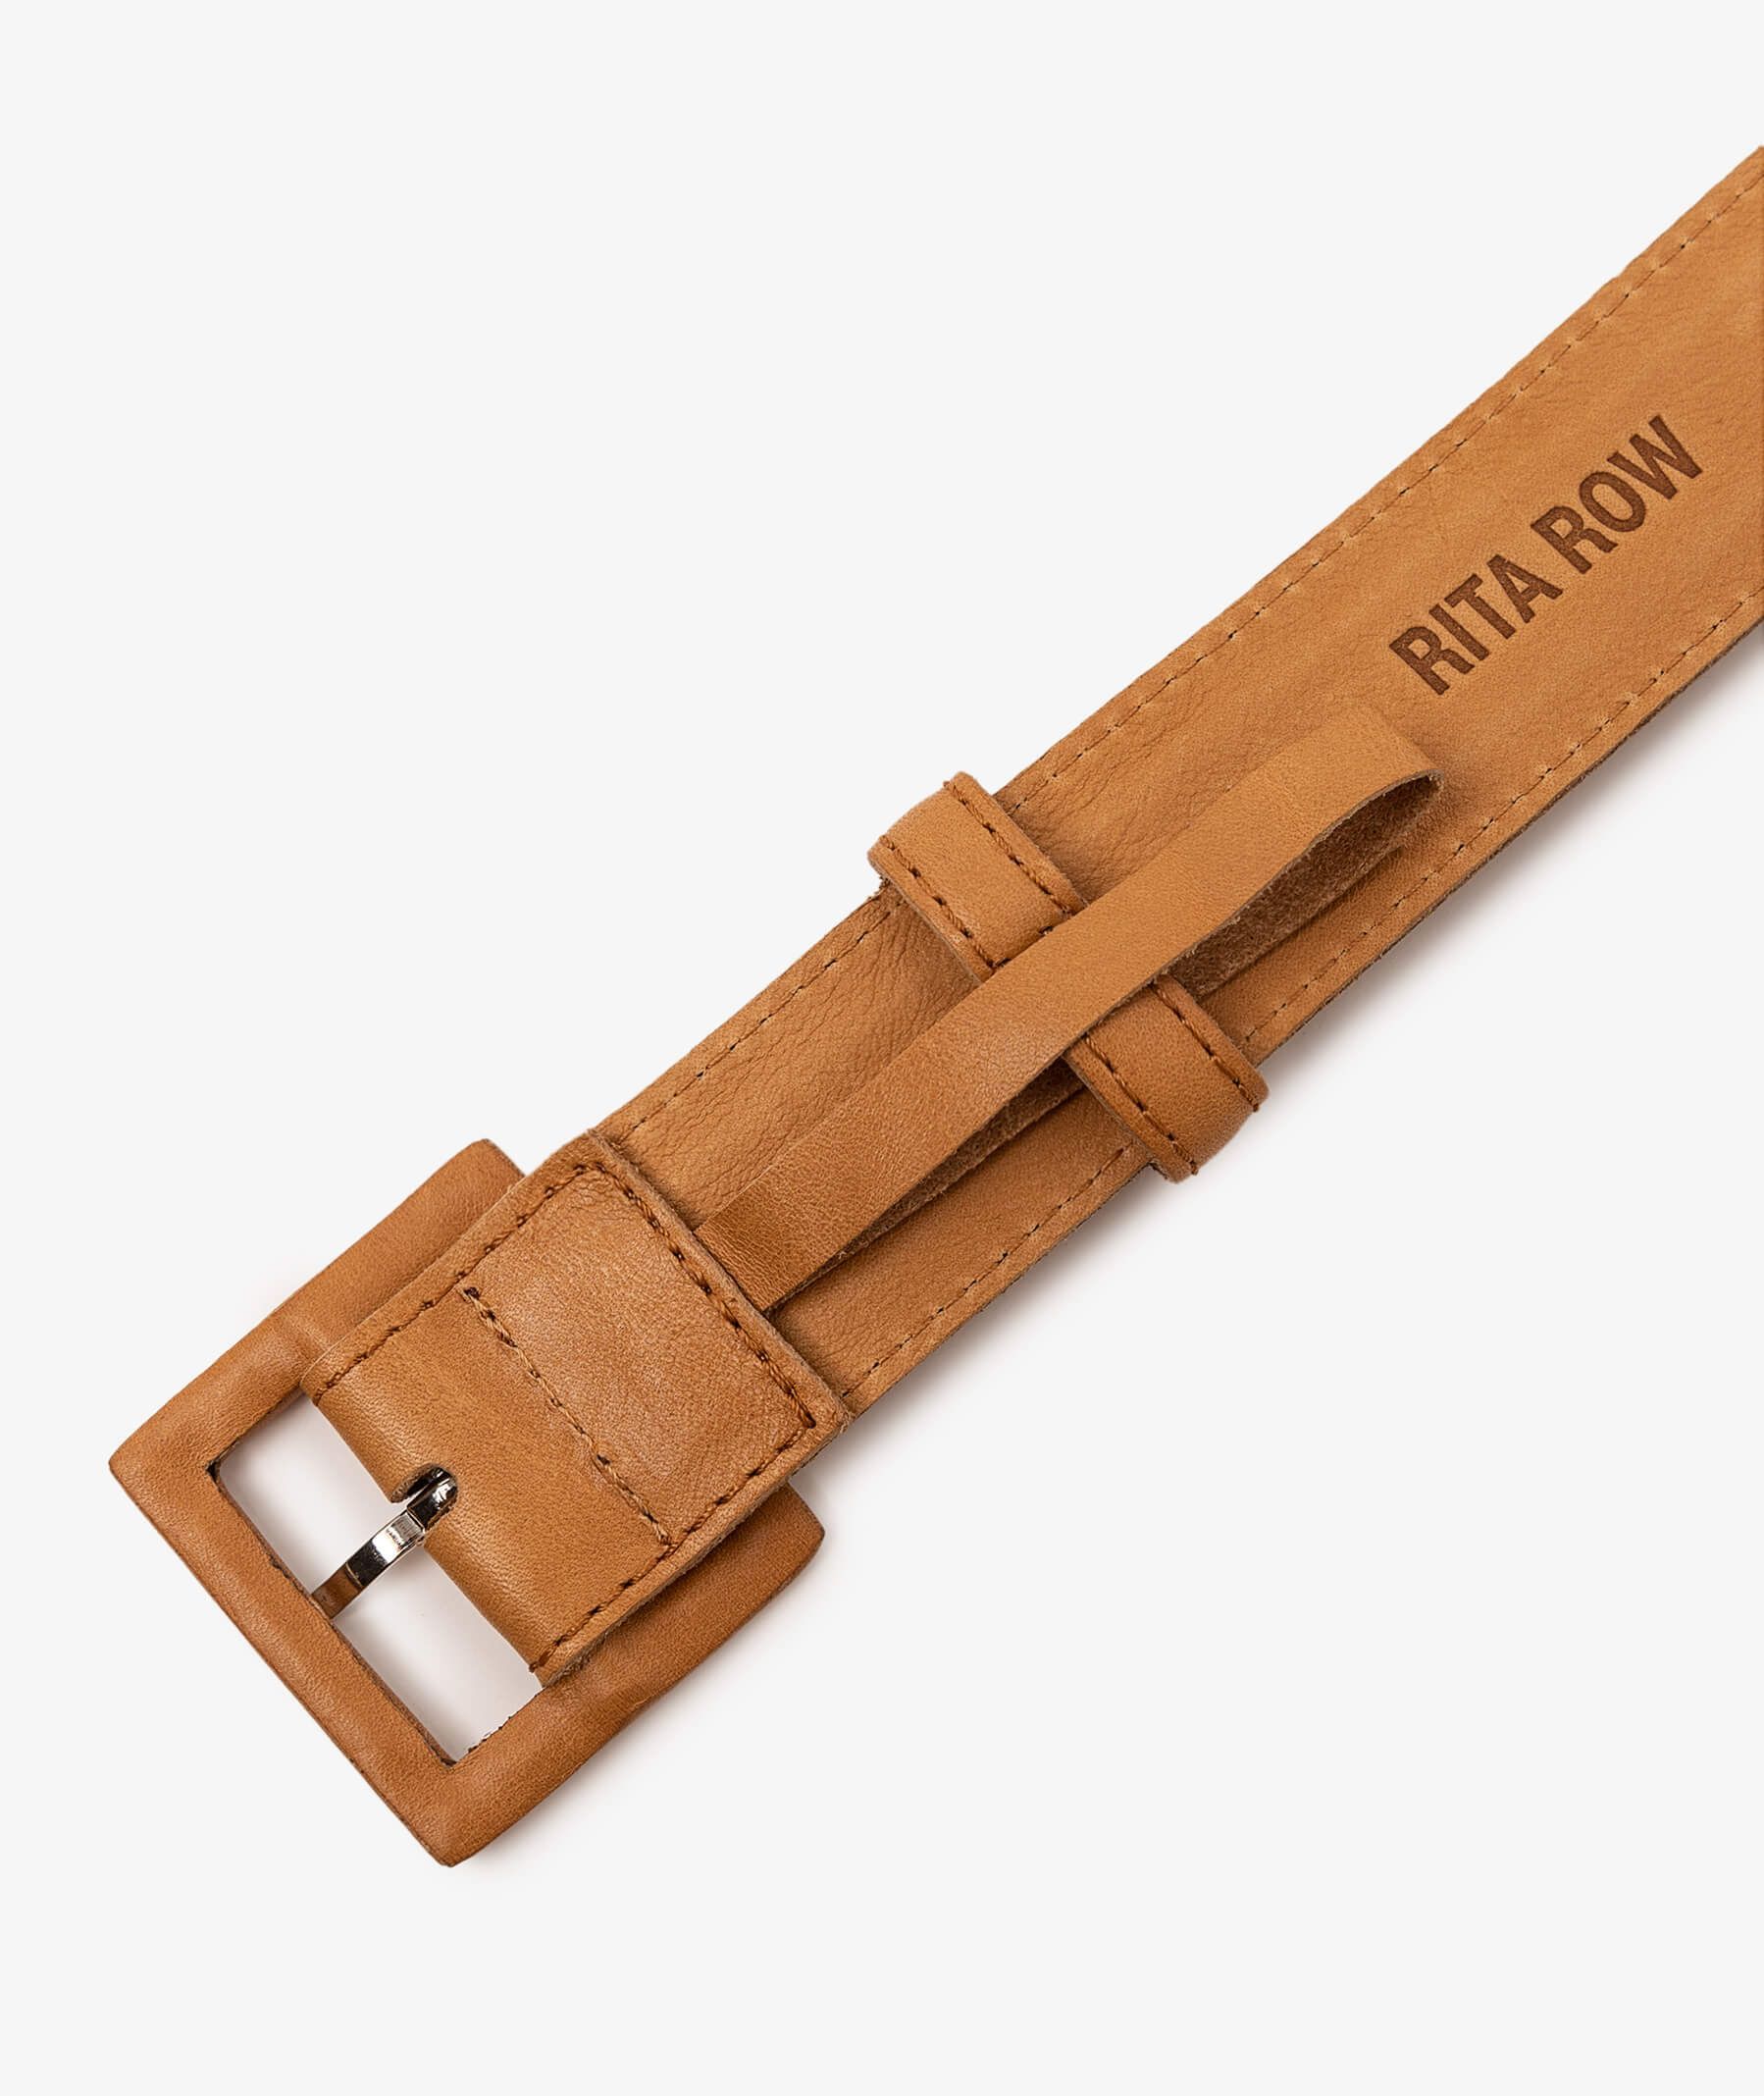 Product Image for Marcela Leather Belt, Brown